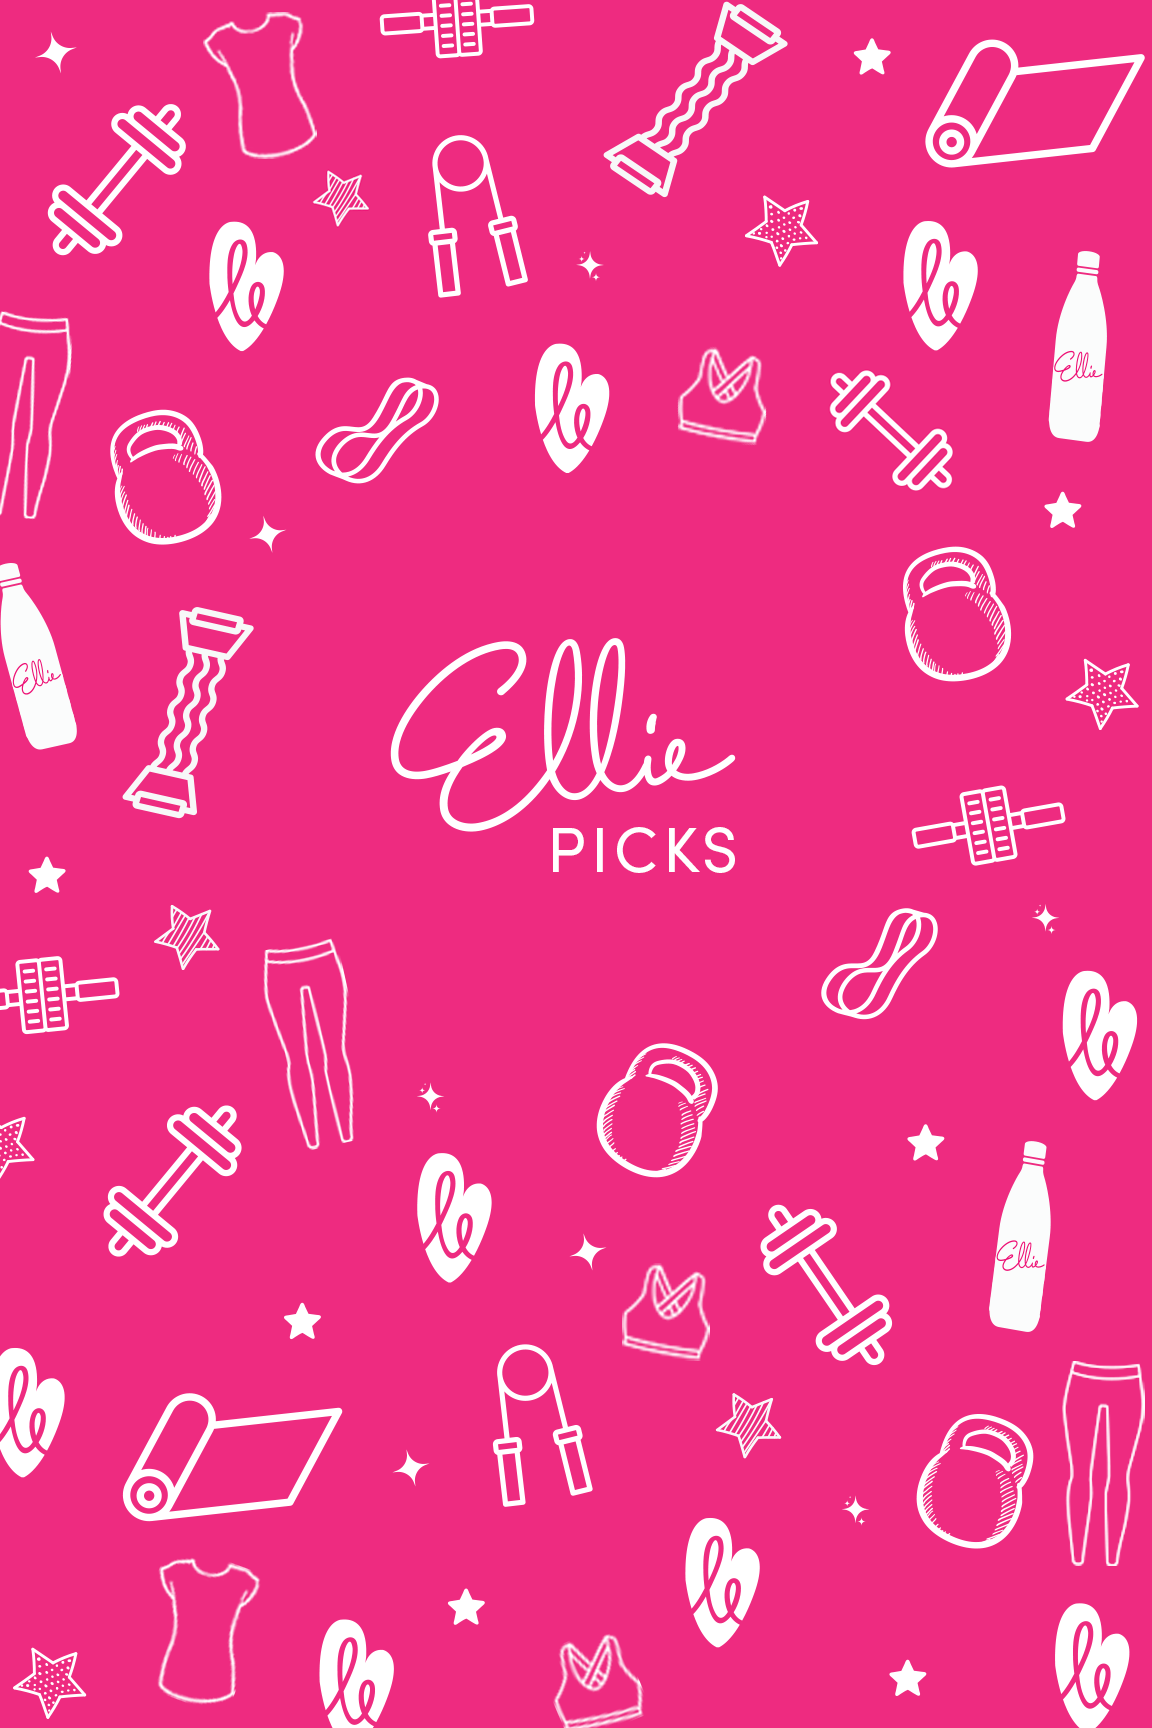 Ellie Picks - 2 Items